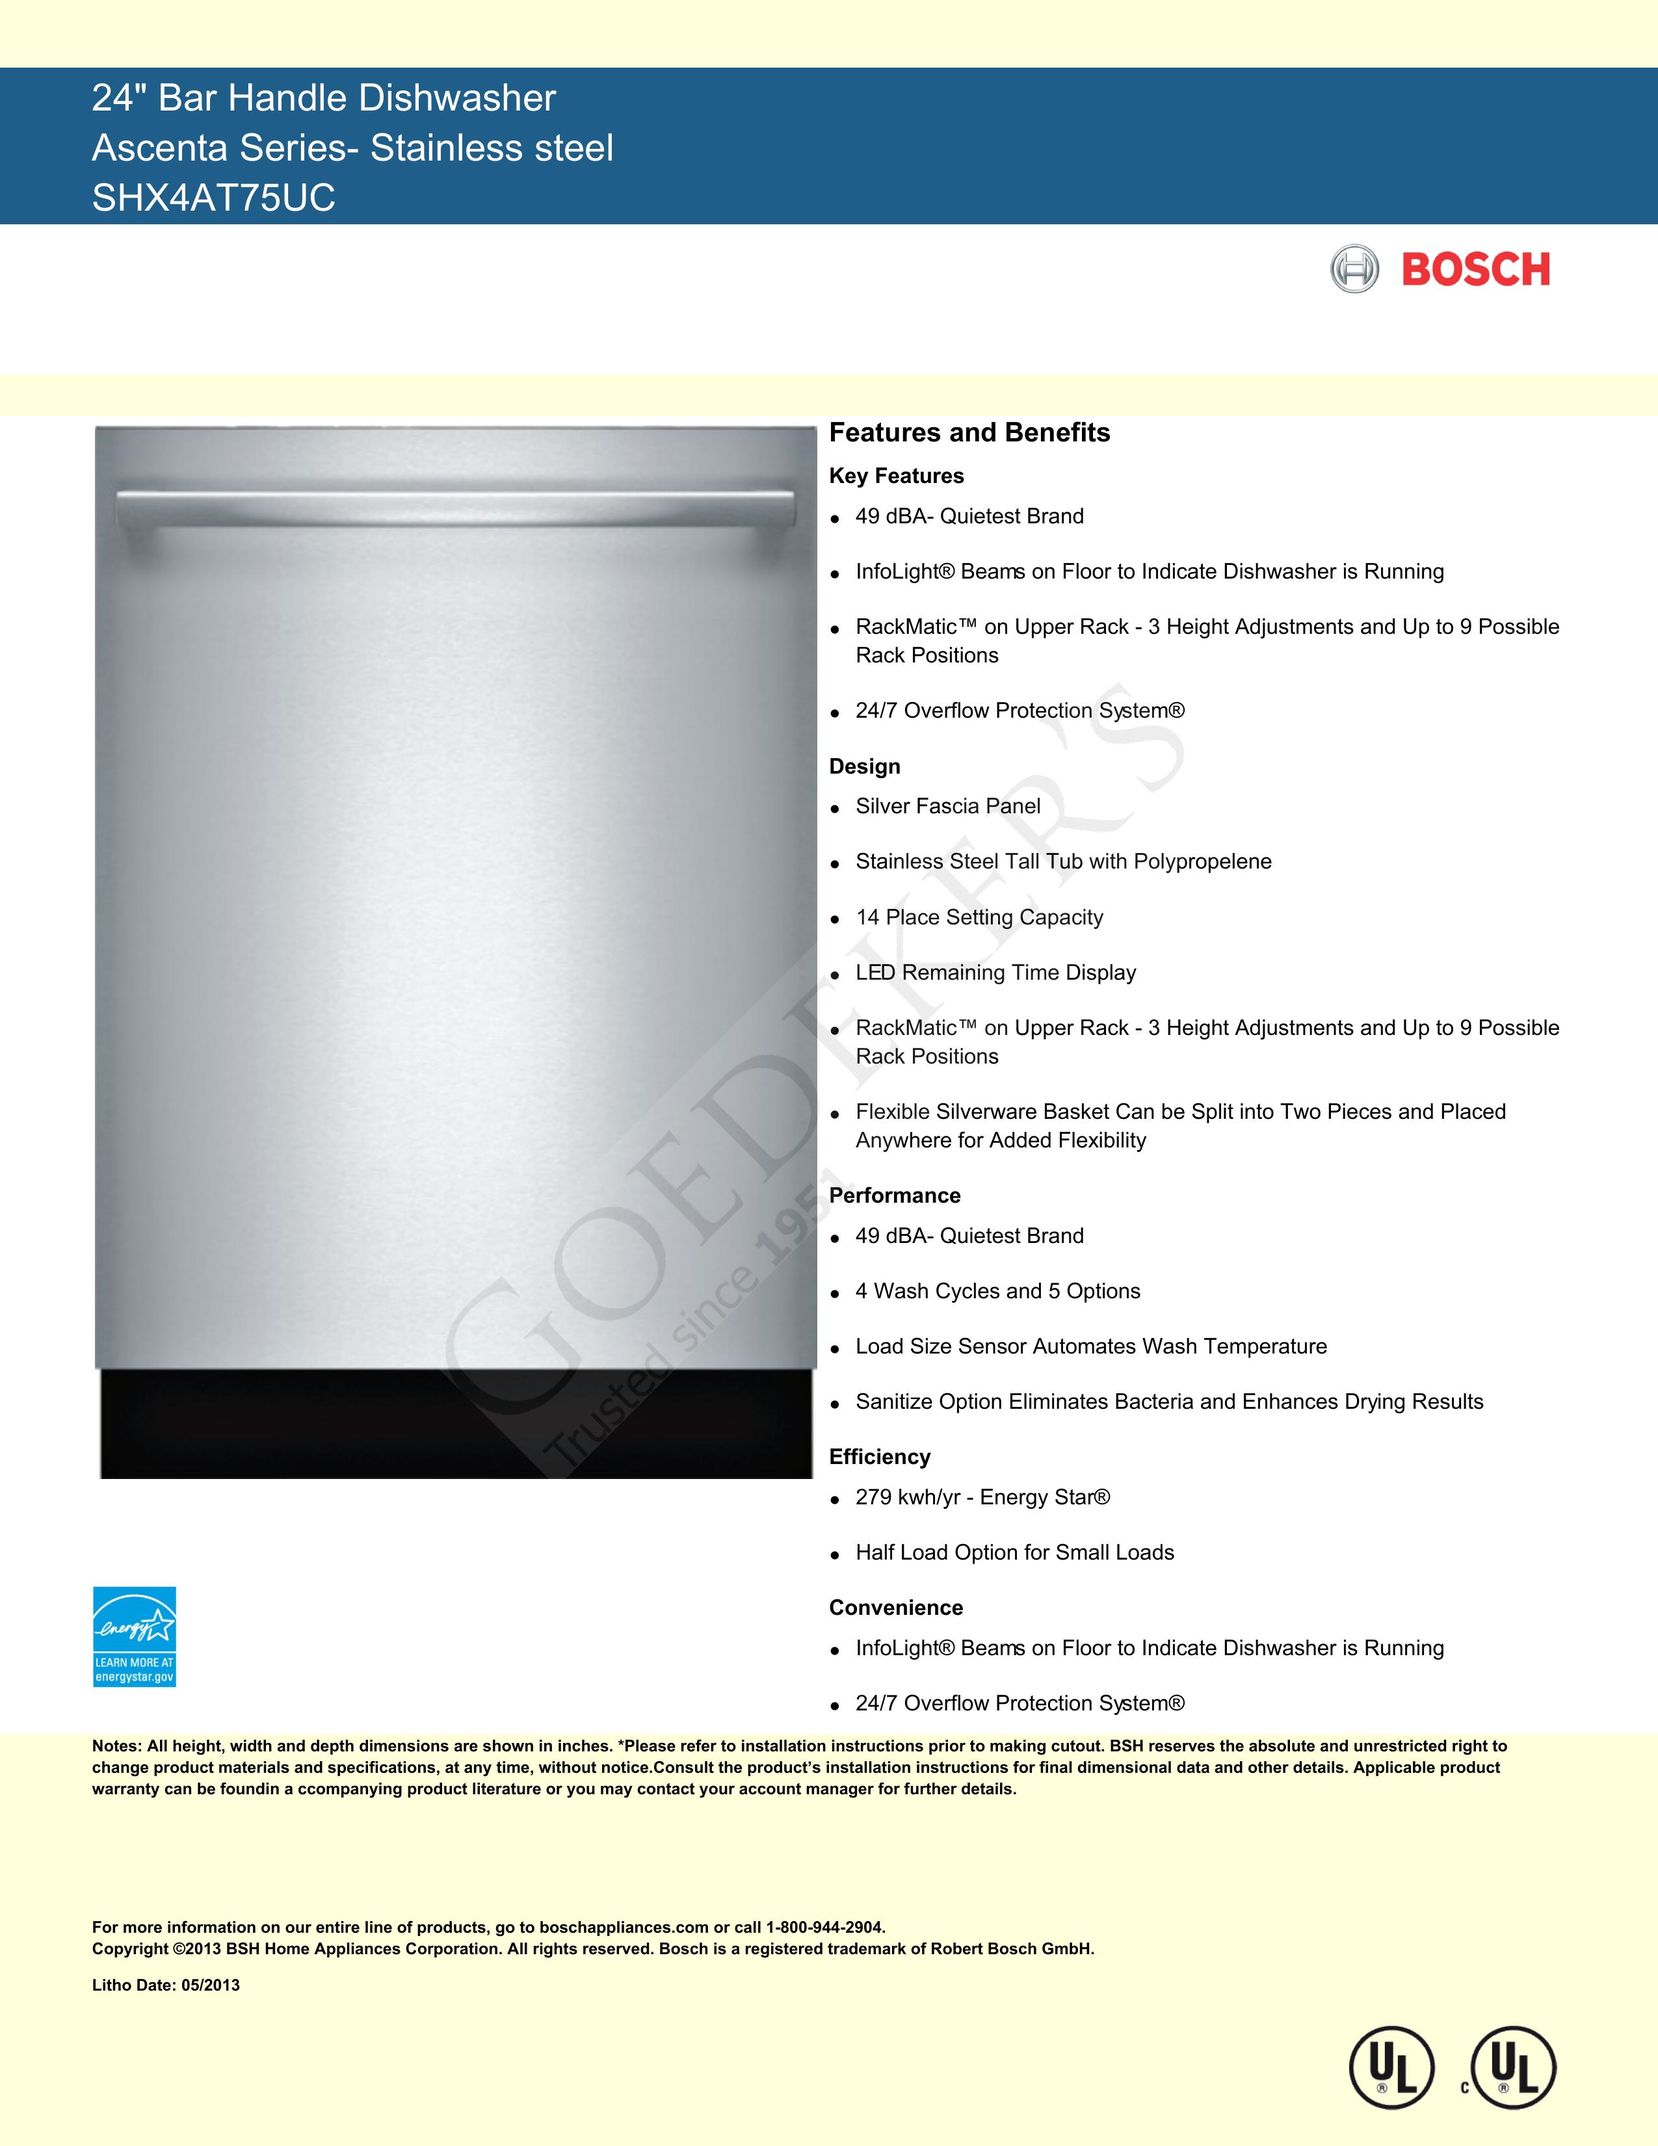 Bosch Appliances 0000 Dishwasher User Manual